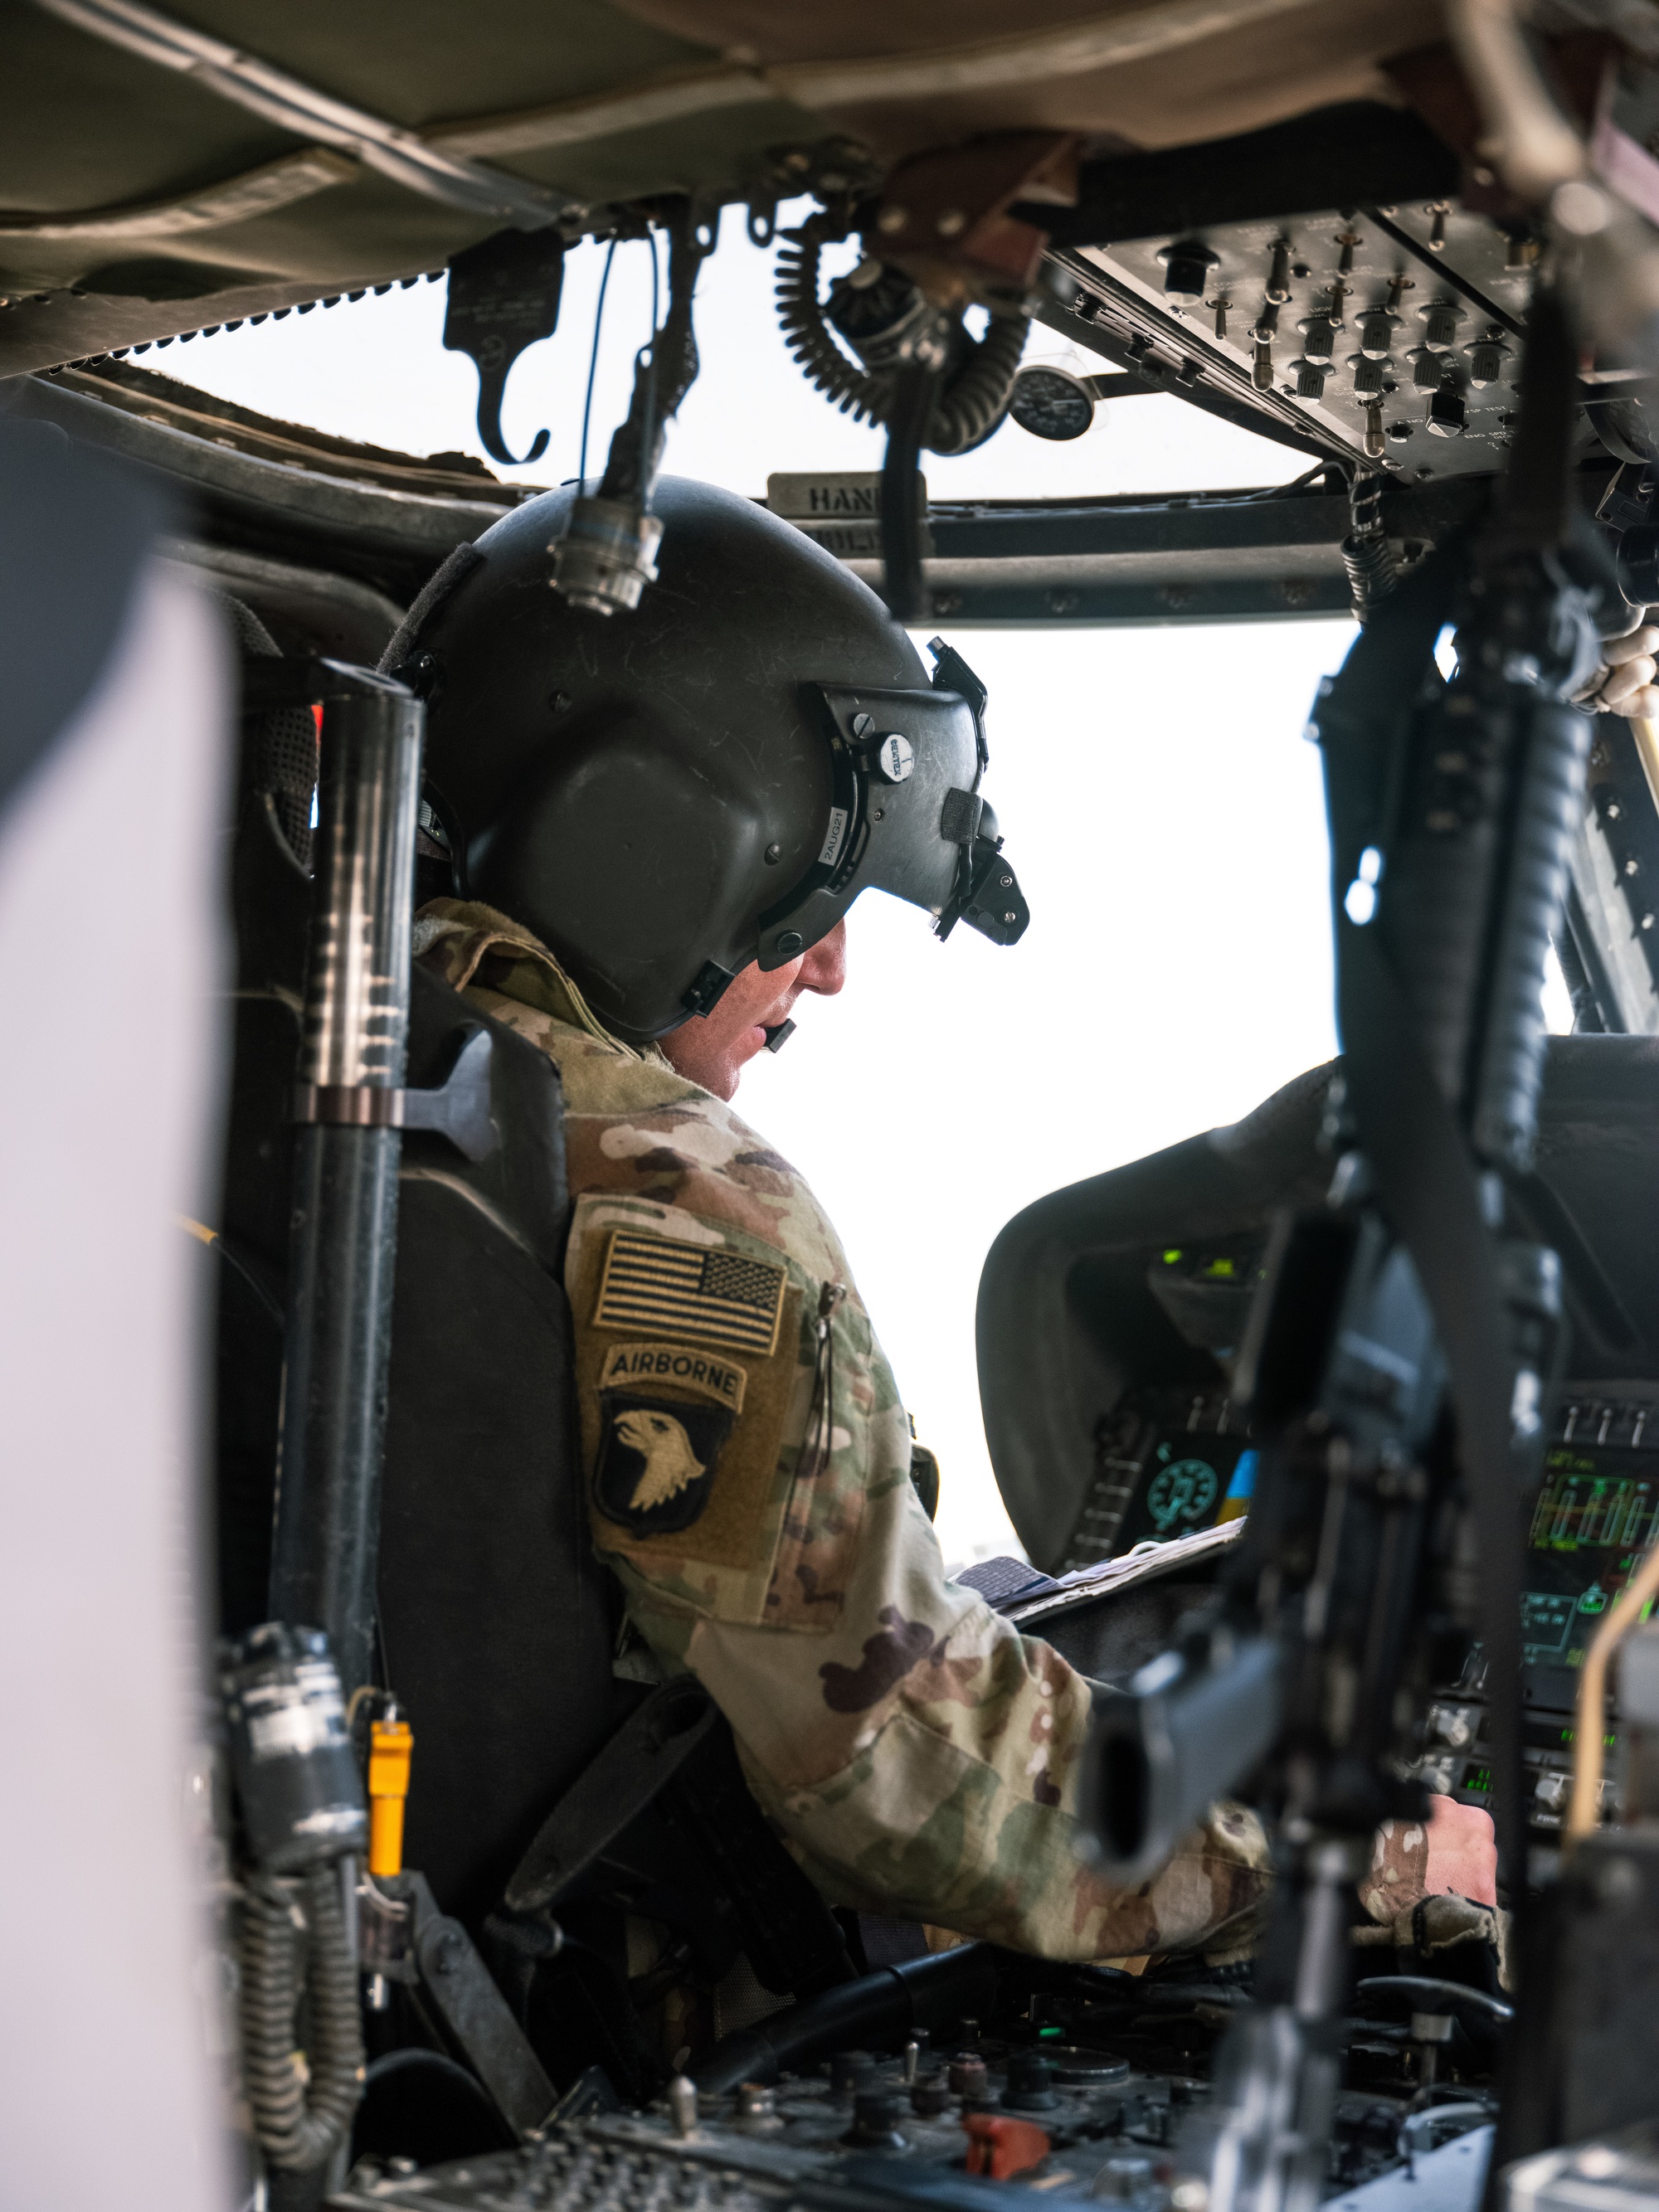 DVIDS - Images - UH-60 Black Hawk over Iraq [Image 6 of 9]